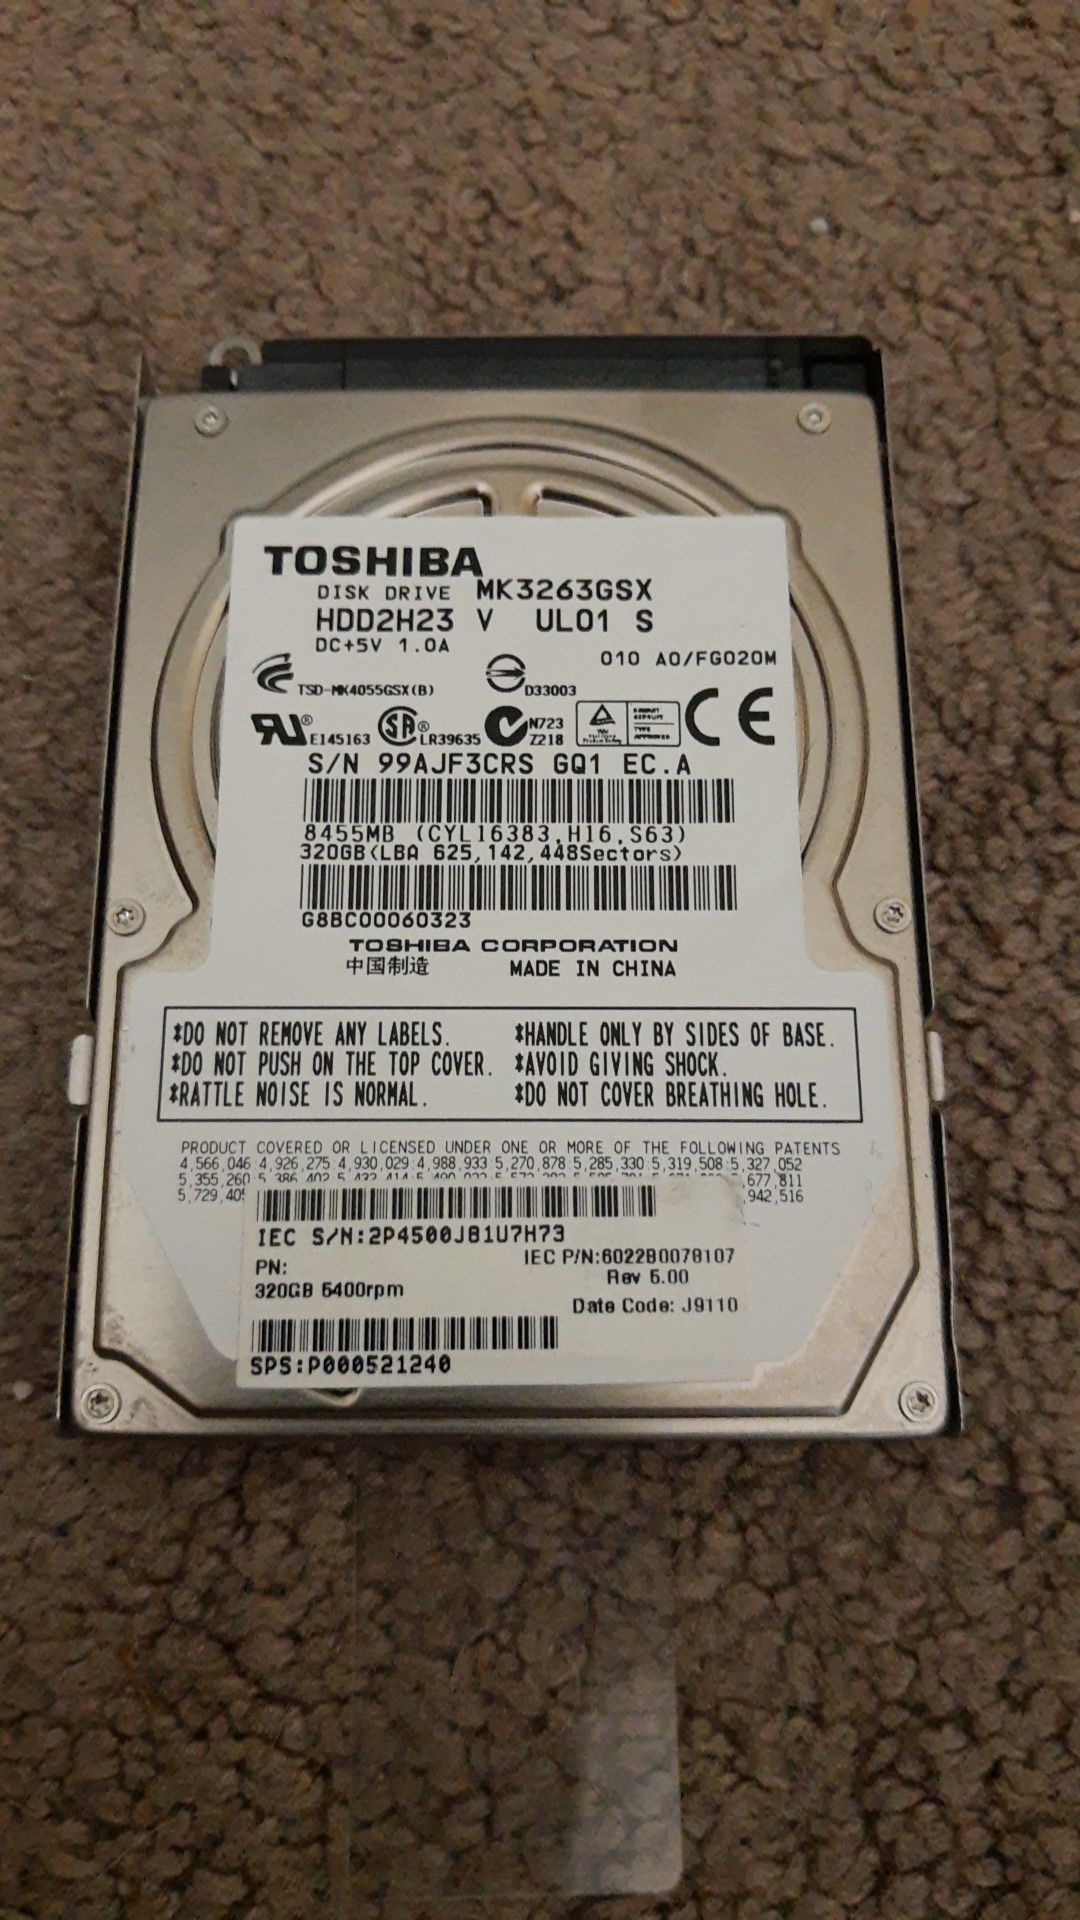 Toshiba 320 Gb internal laptop hard drive